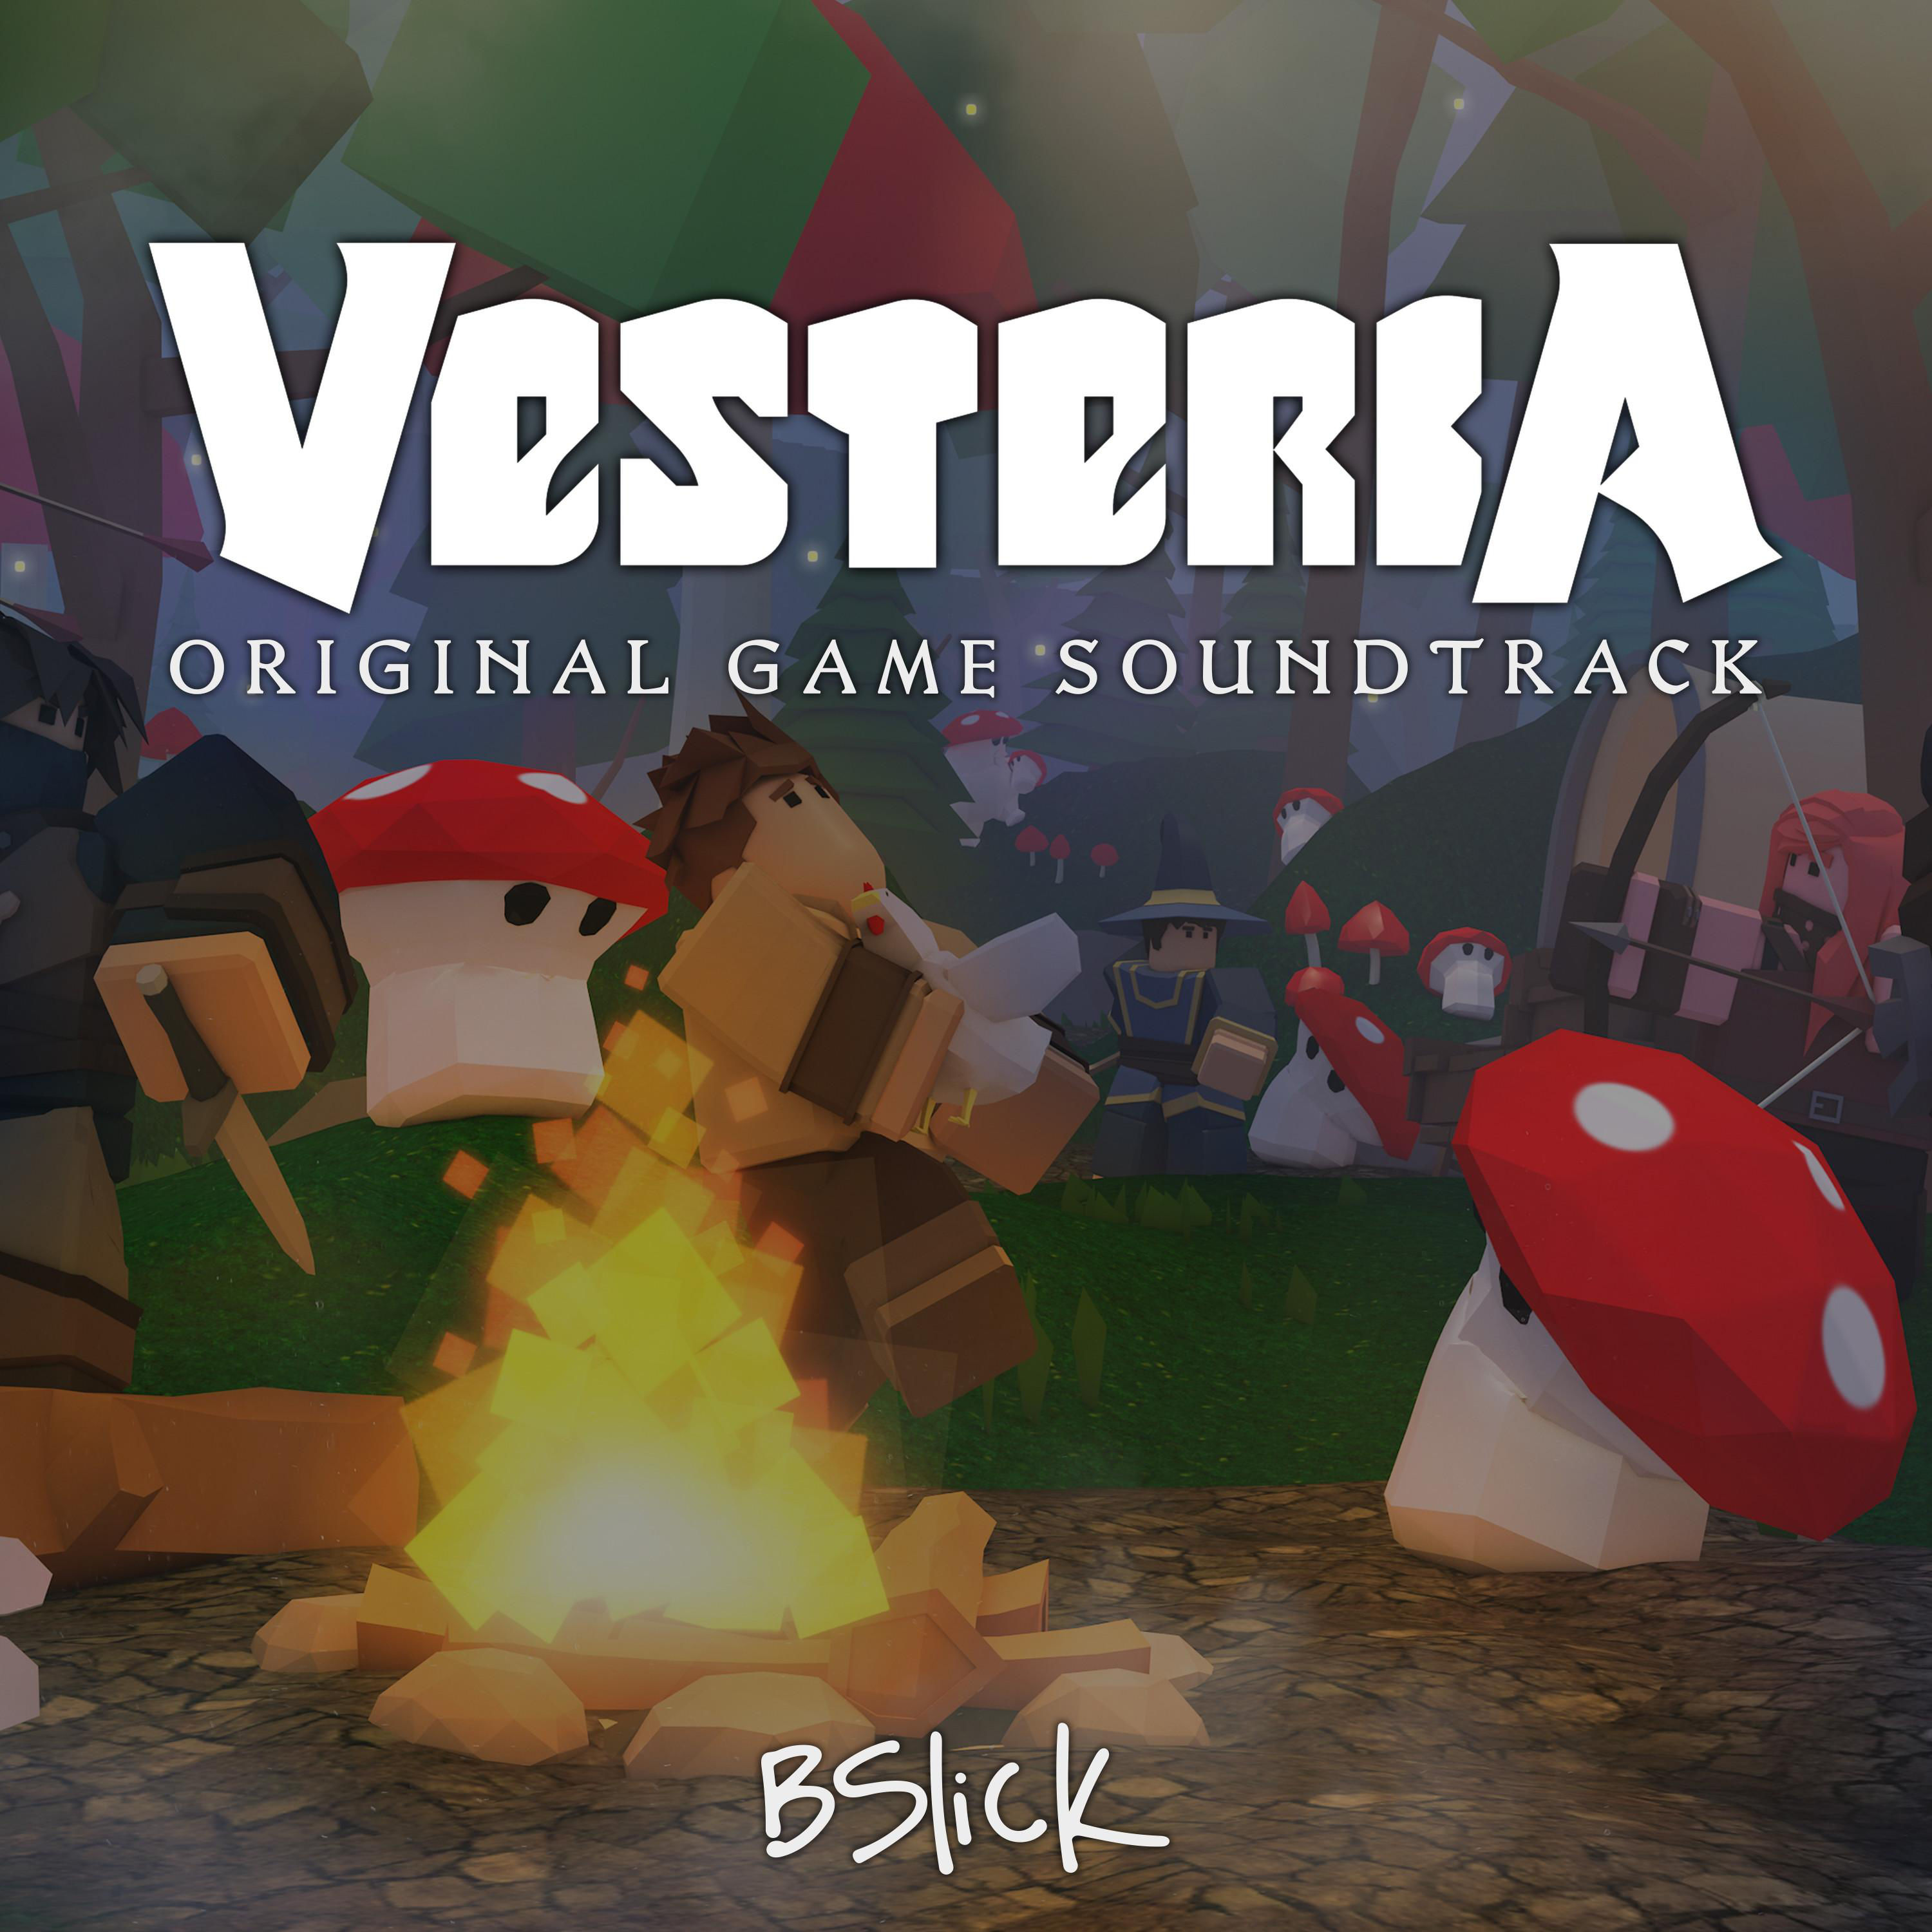 Vesteria Original Game Soundtrack.